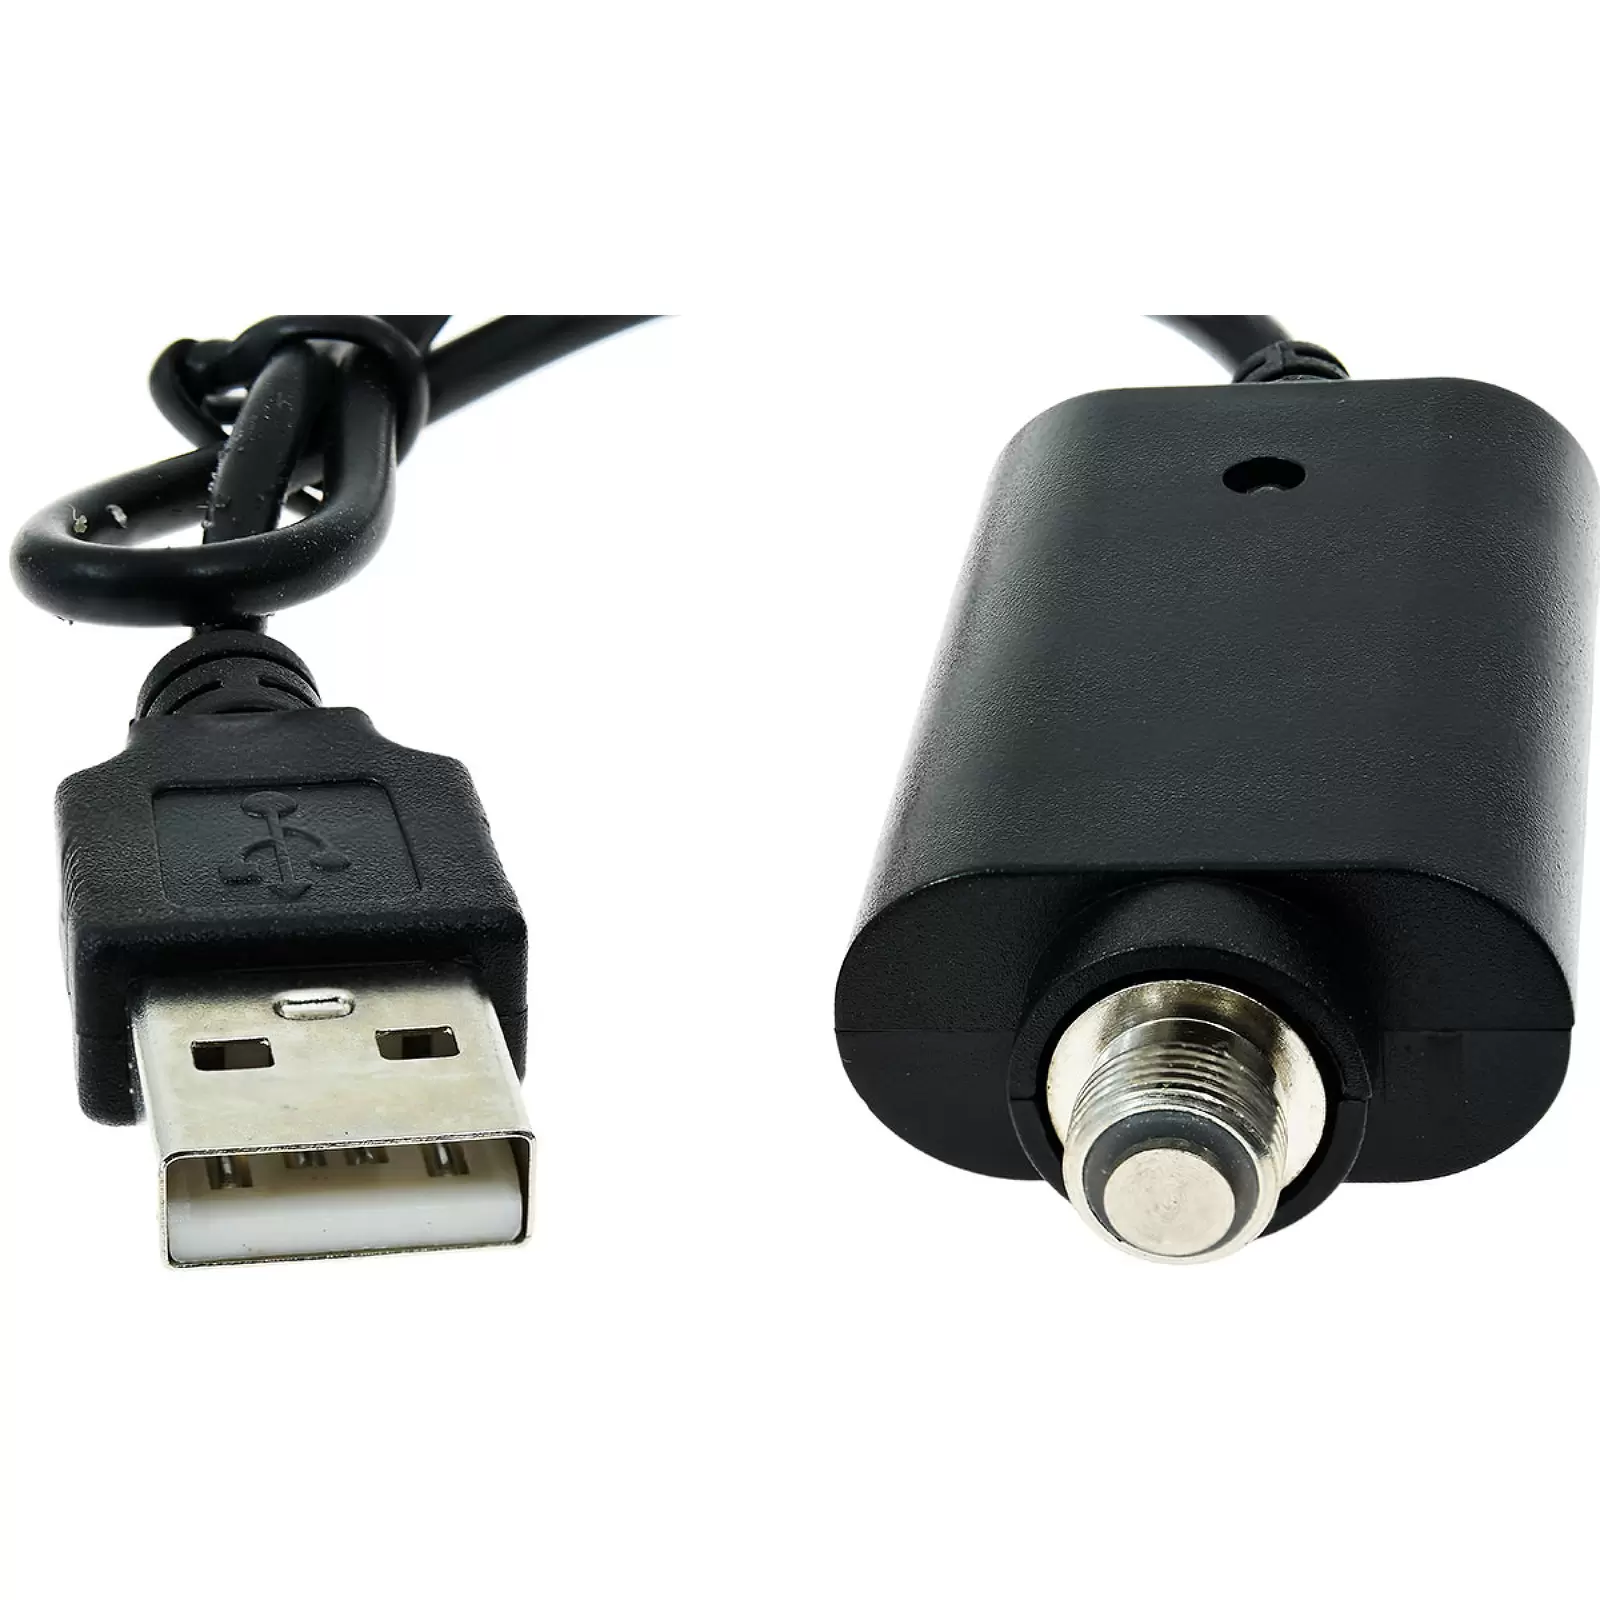 Ladekabel, Ladegerät für E-Zigarette / Shisha Typ USB-RT-1103-2 mit USB